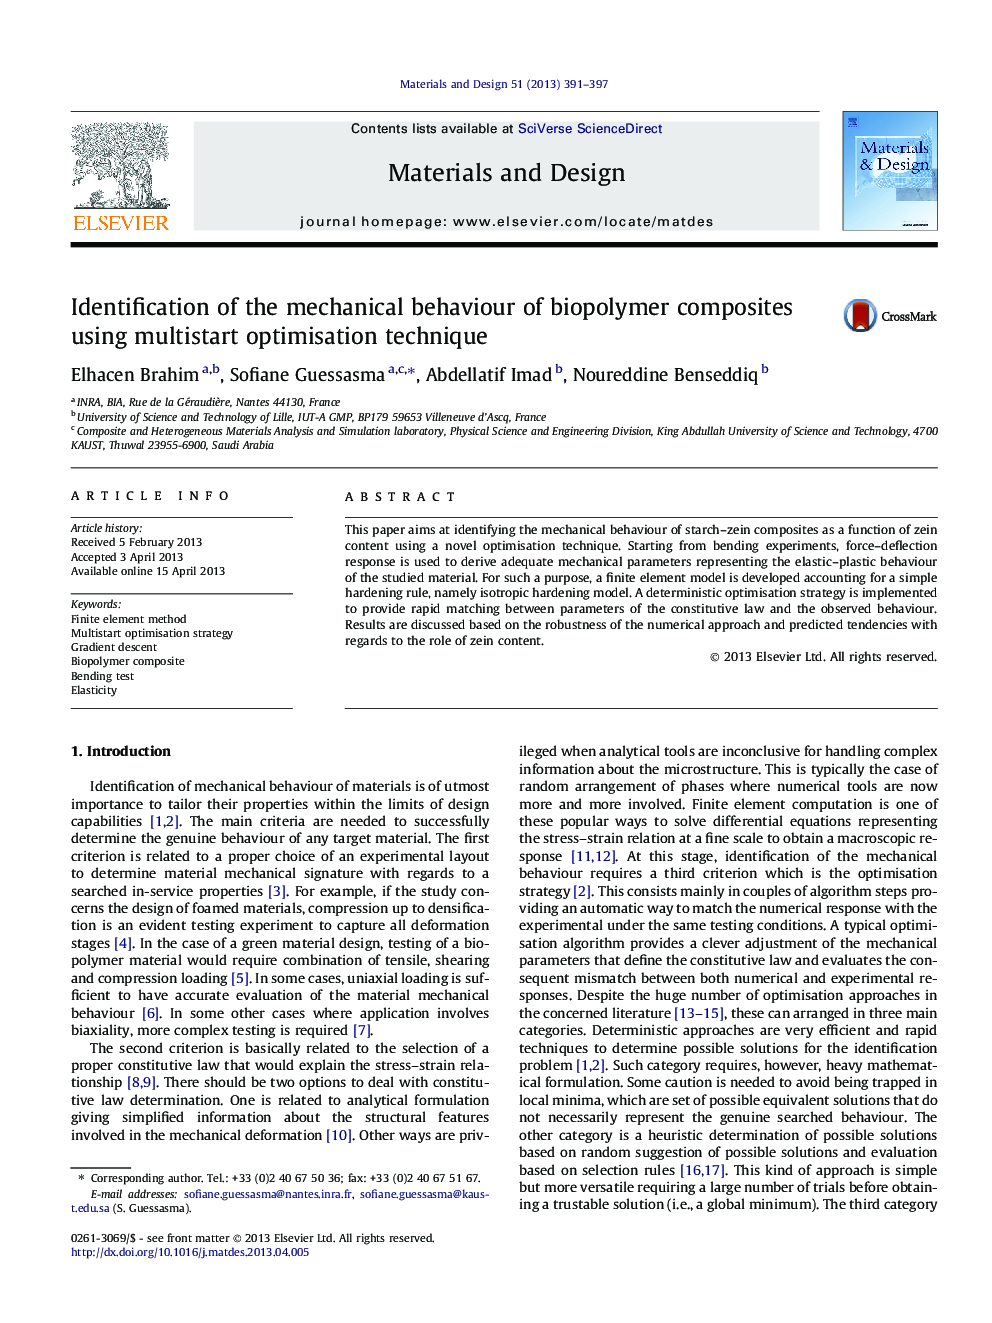 Identification of the mechanical behaviour of biopolymer composites using multistart optimisation technique